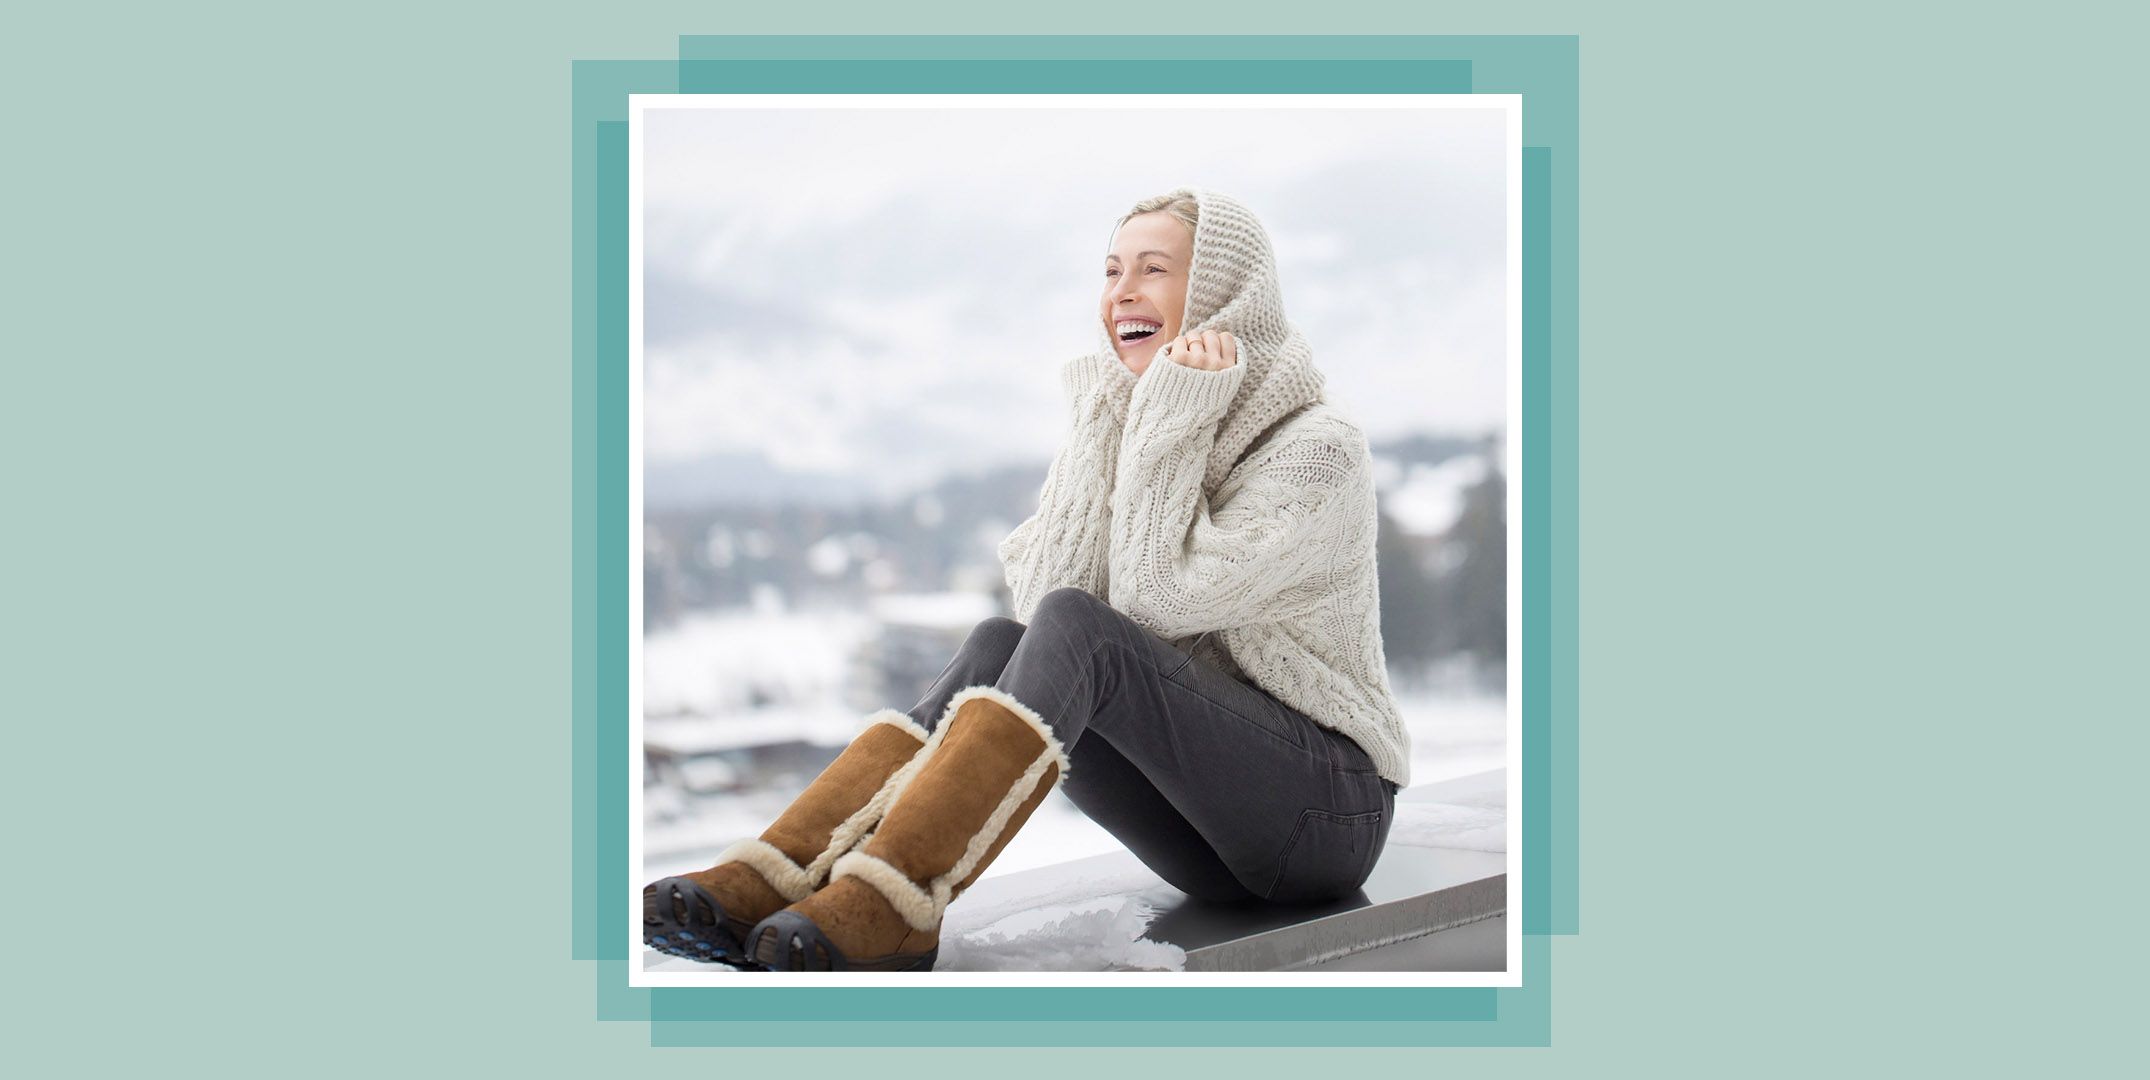 ACAI Outdoorwear  Comfy, Stretchy, Warm, Women's Winter Leggings